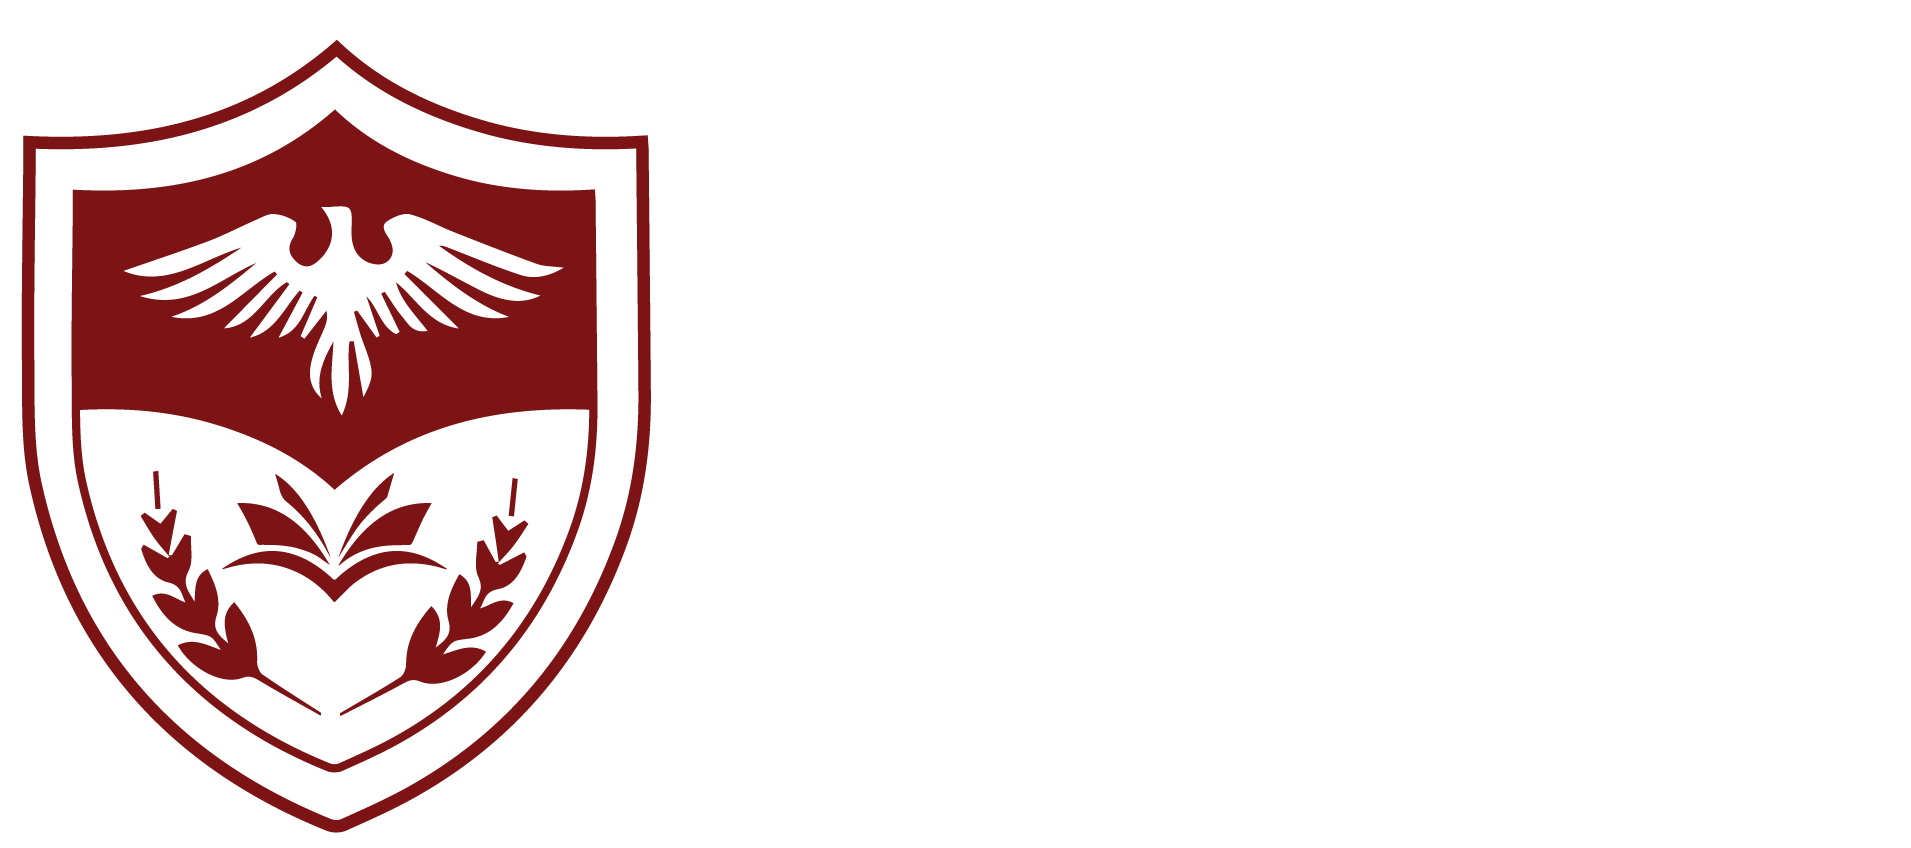 The N.E.W University